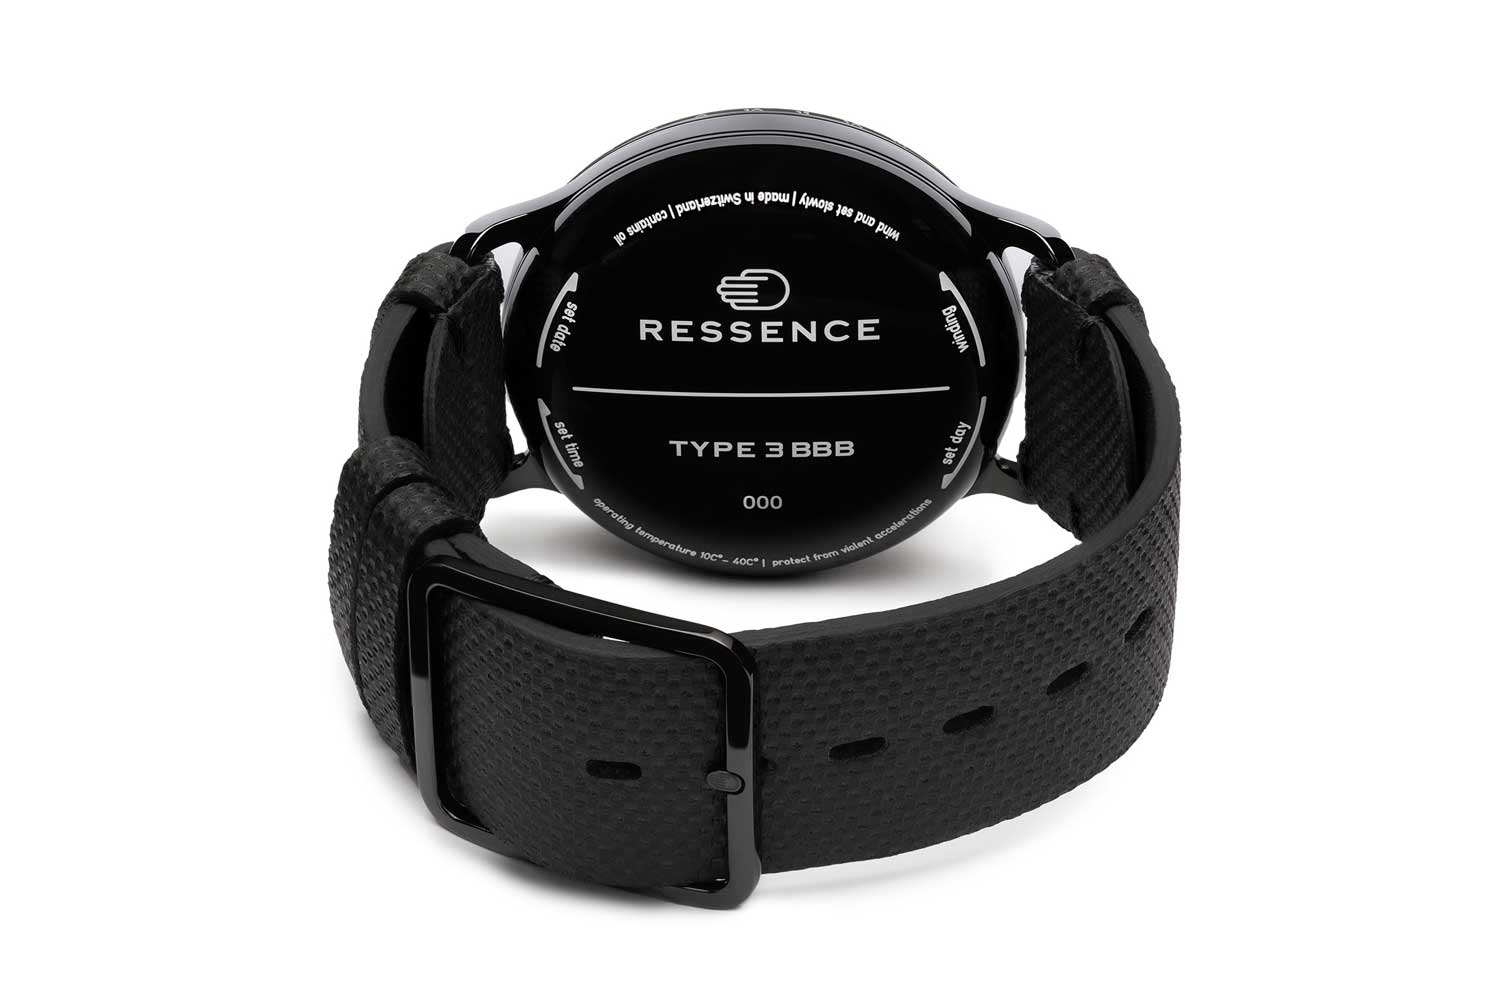 Ressence Type 3BBB